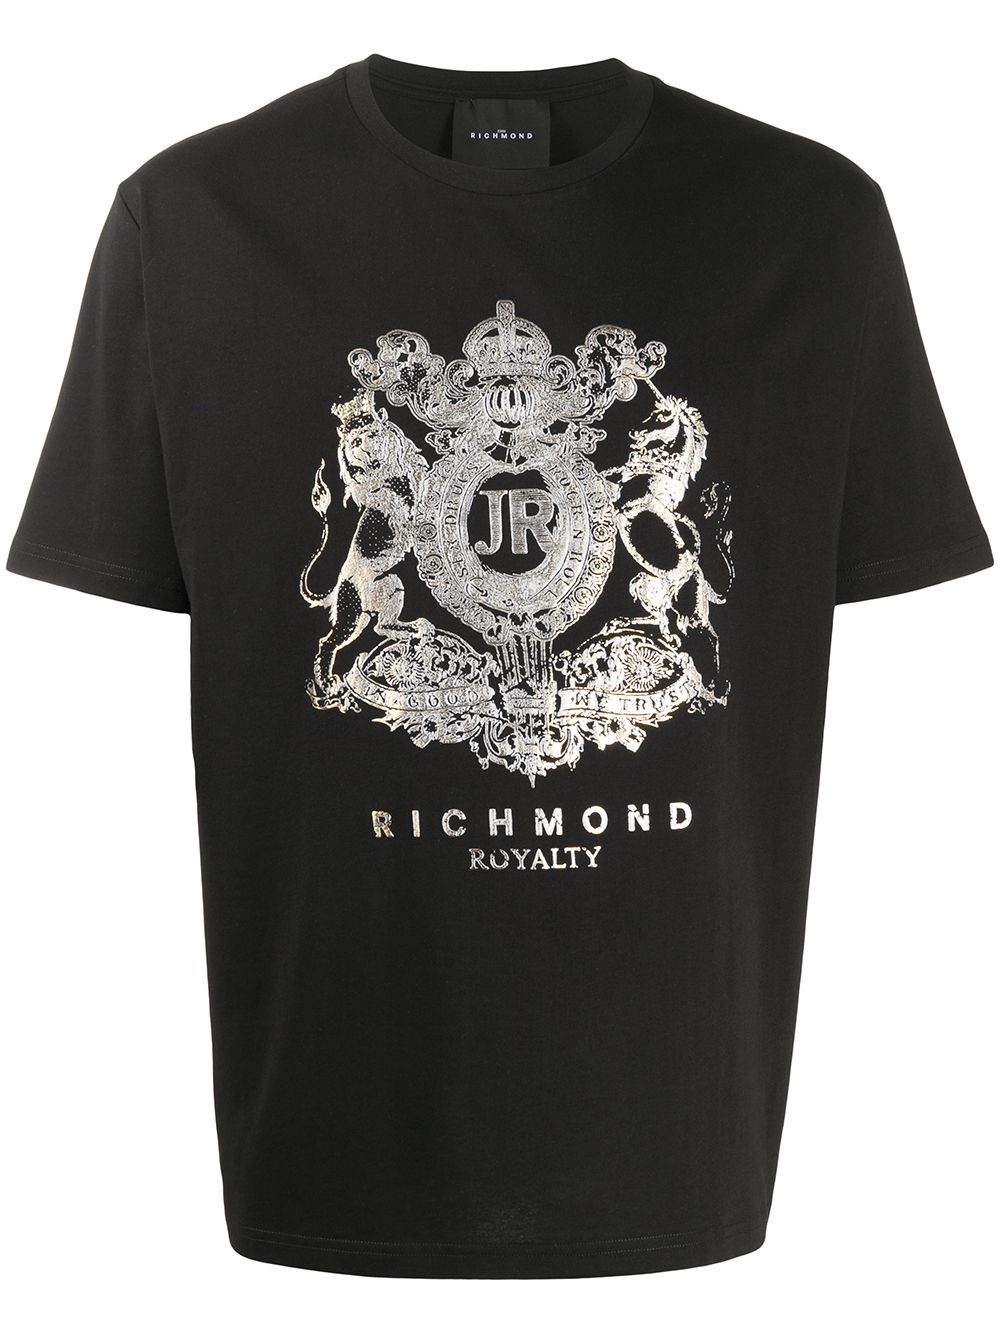 Футболка ричмонд. John Richmond футболка с монограммой. John Richmond футболка. Футболка John Richmond черная. Футболка Ричмонд мужская.